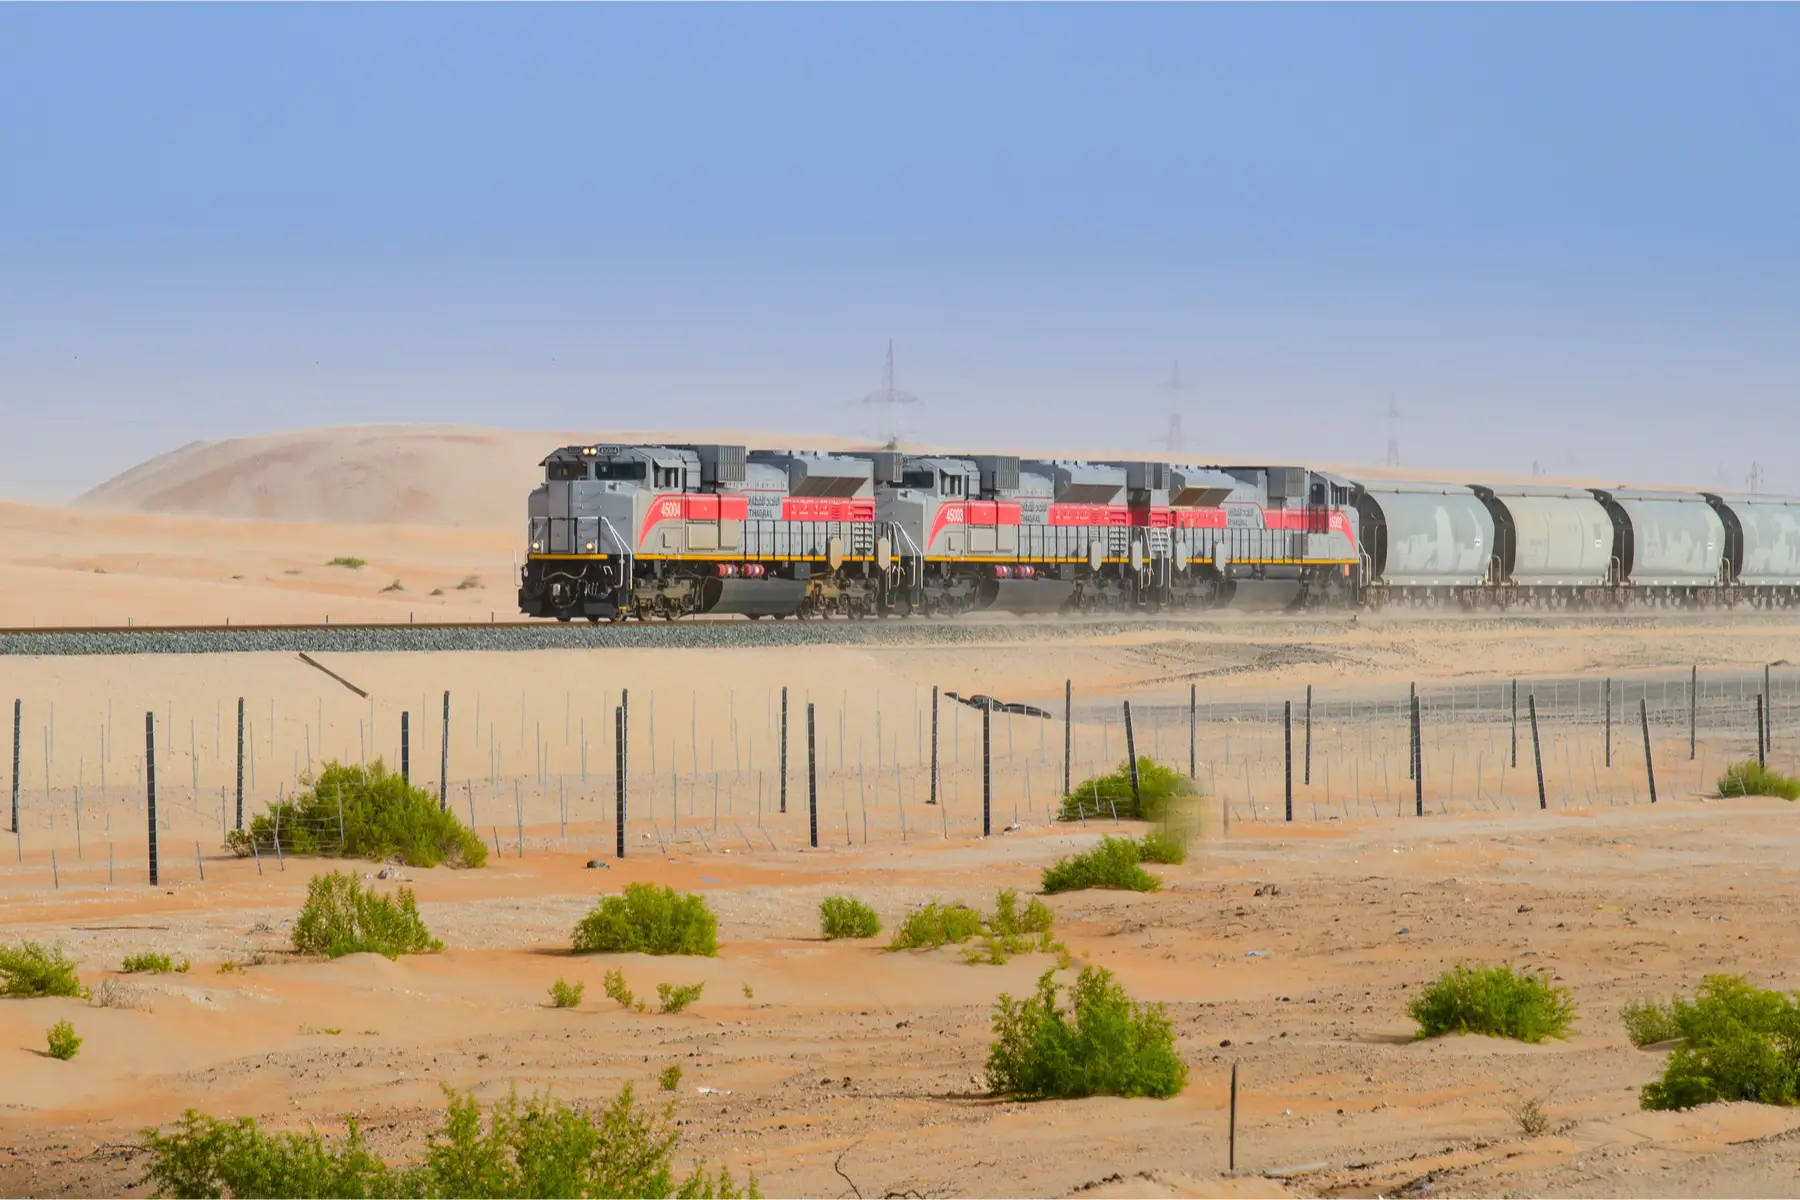 removals to UAE: a freight train in the  Liwa desert of Abu Dhabi